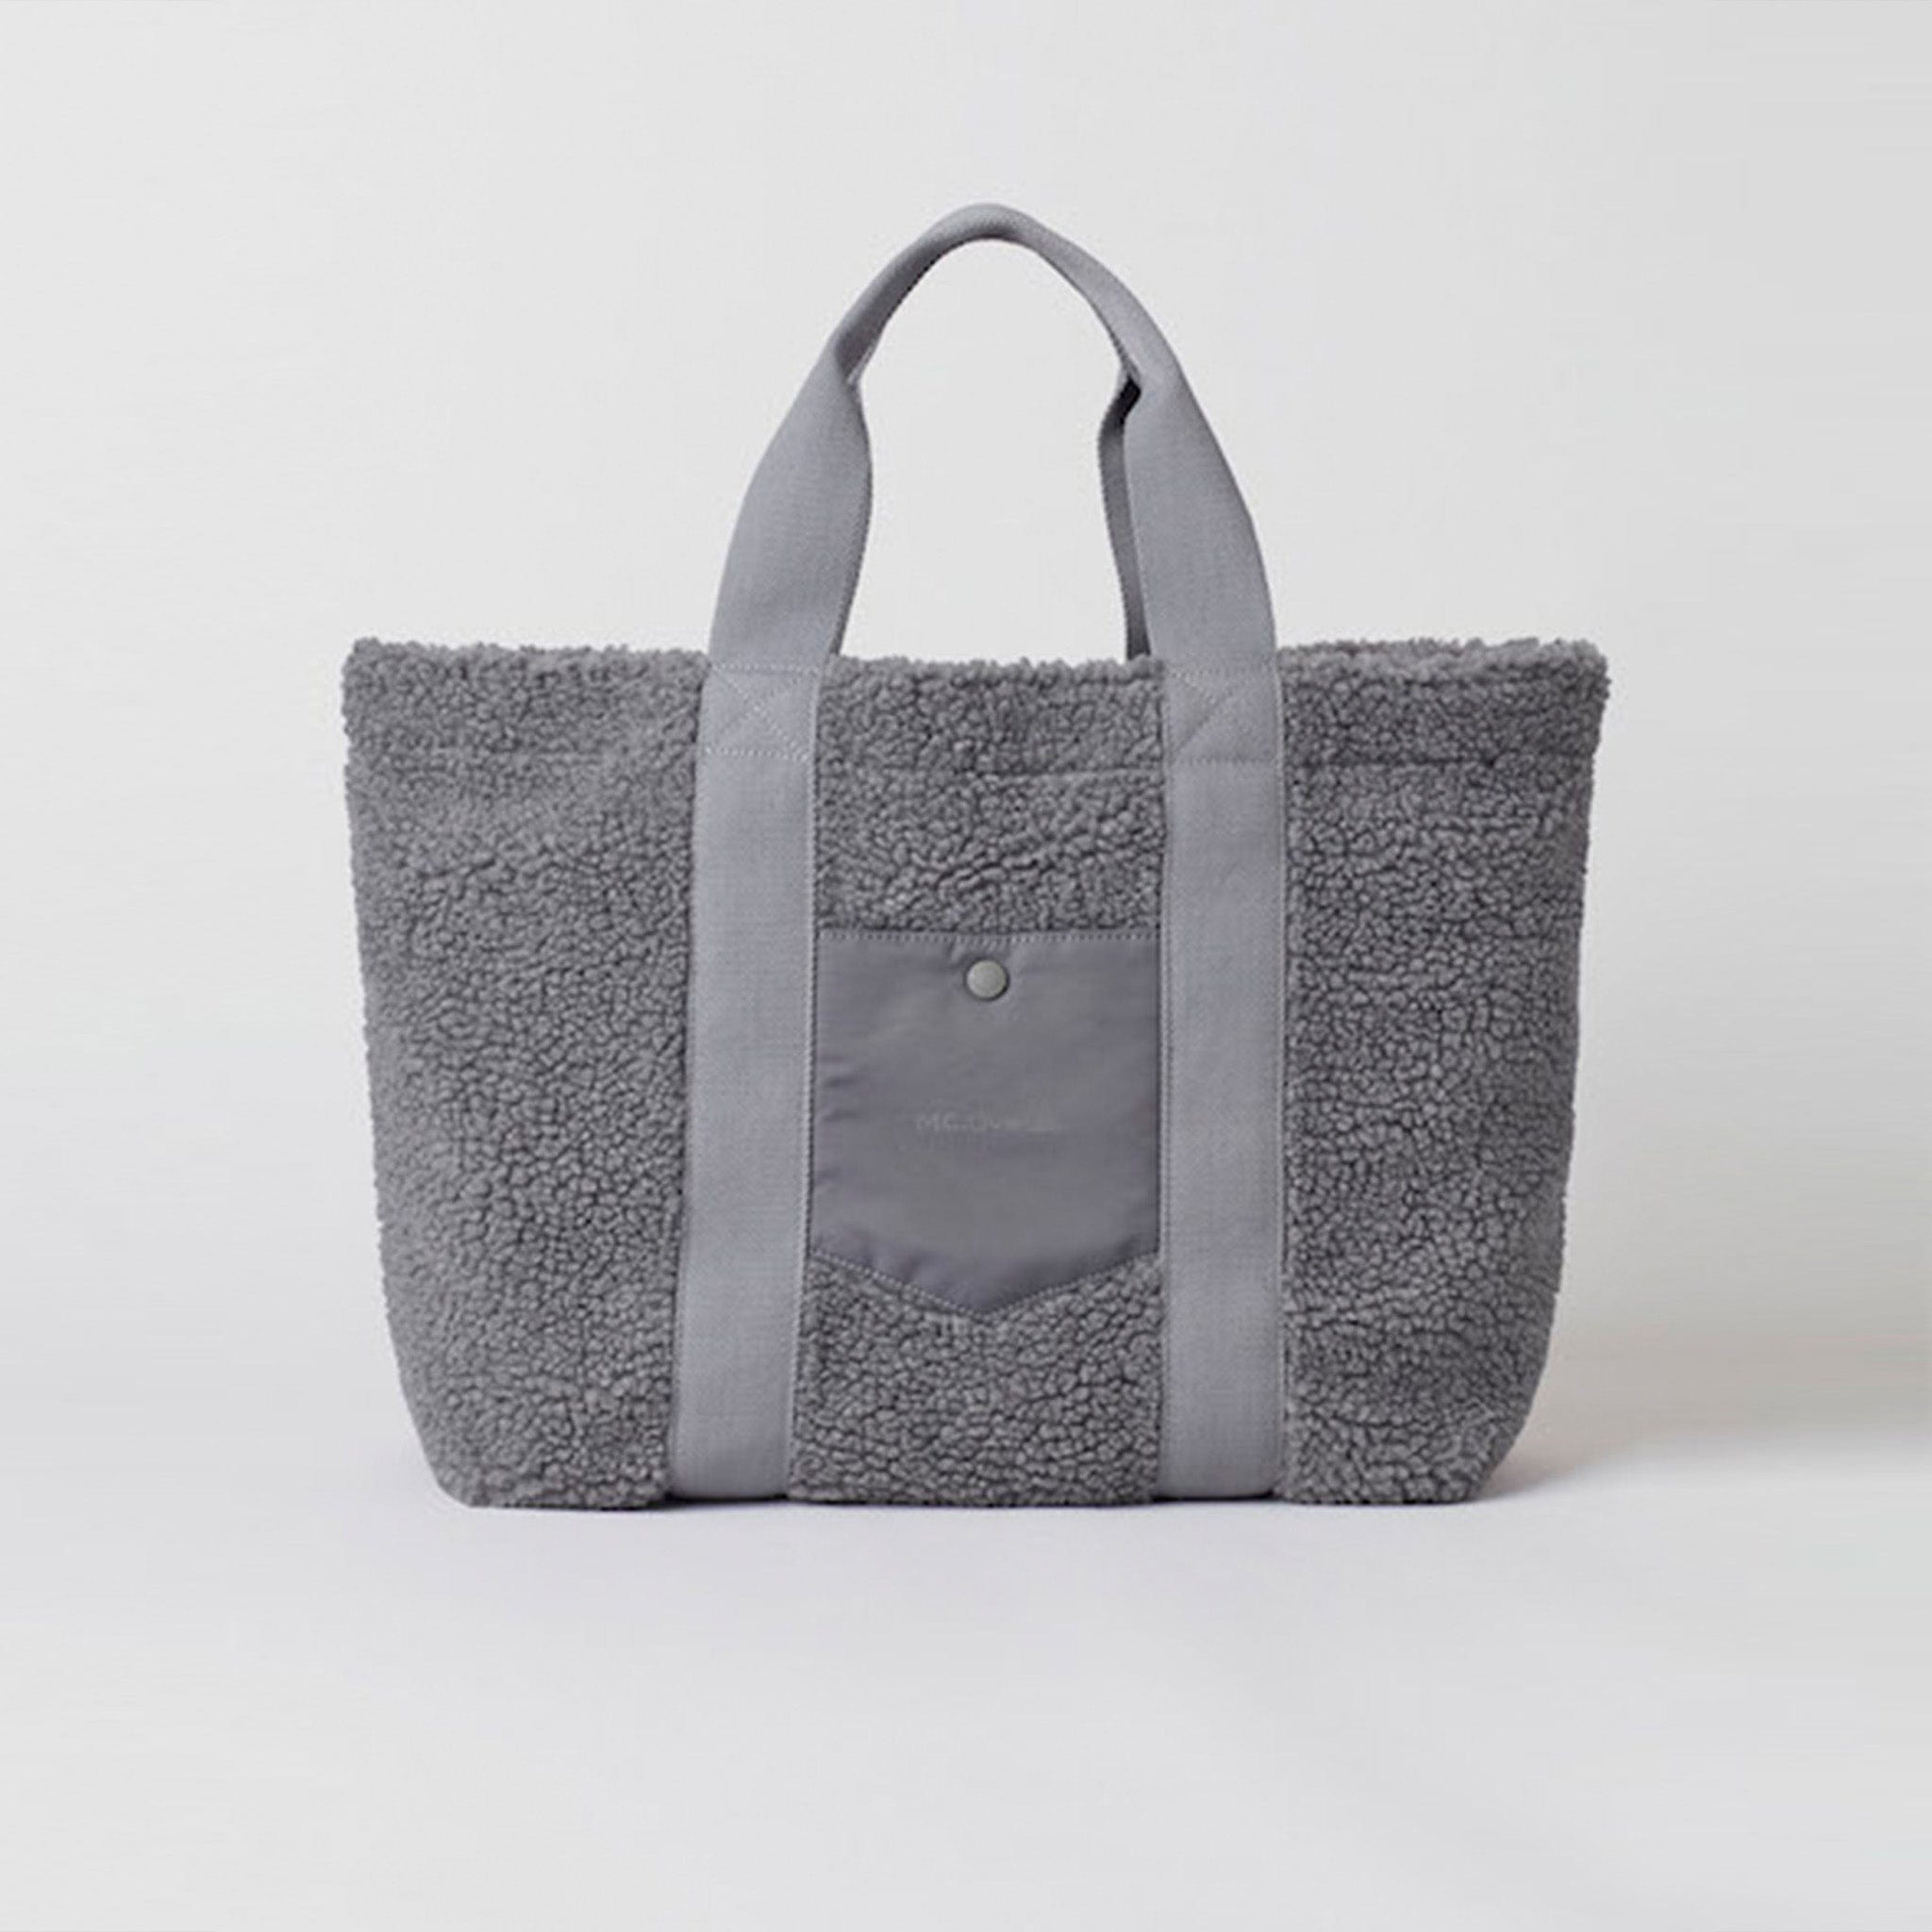 Pocket Tote Fleece Bag Greymarl